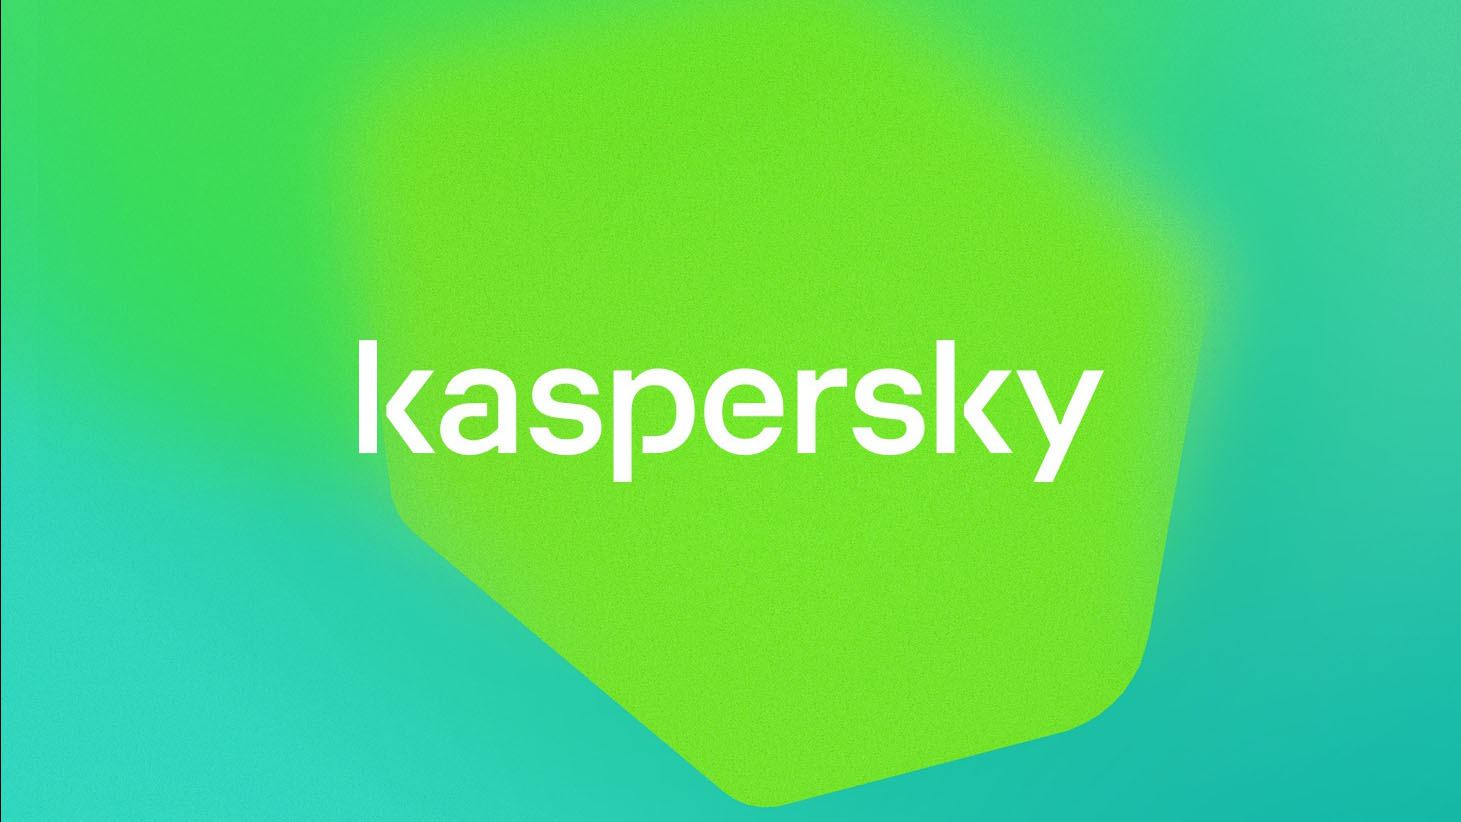 comodo internet security vs kaspersky